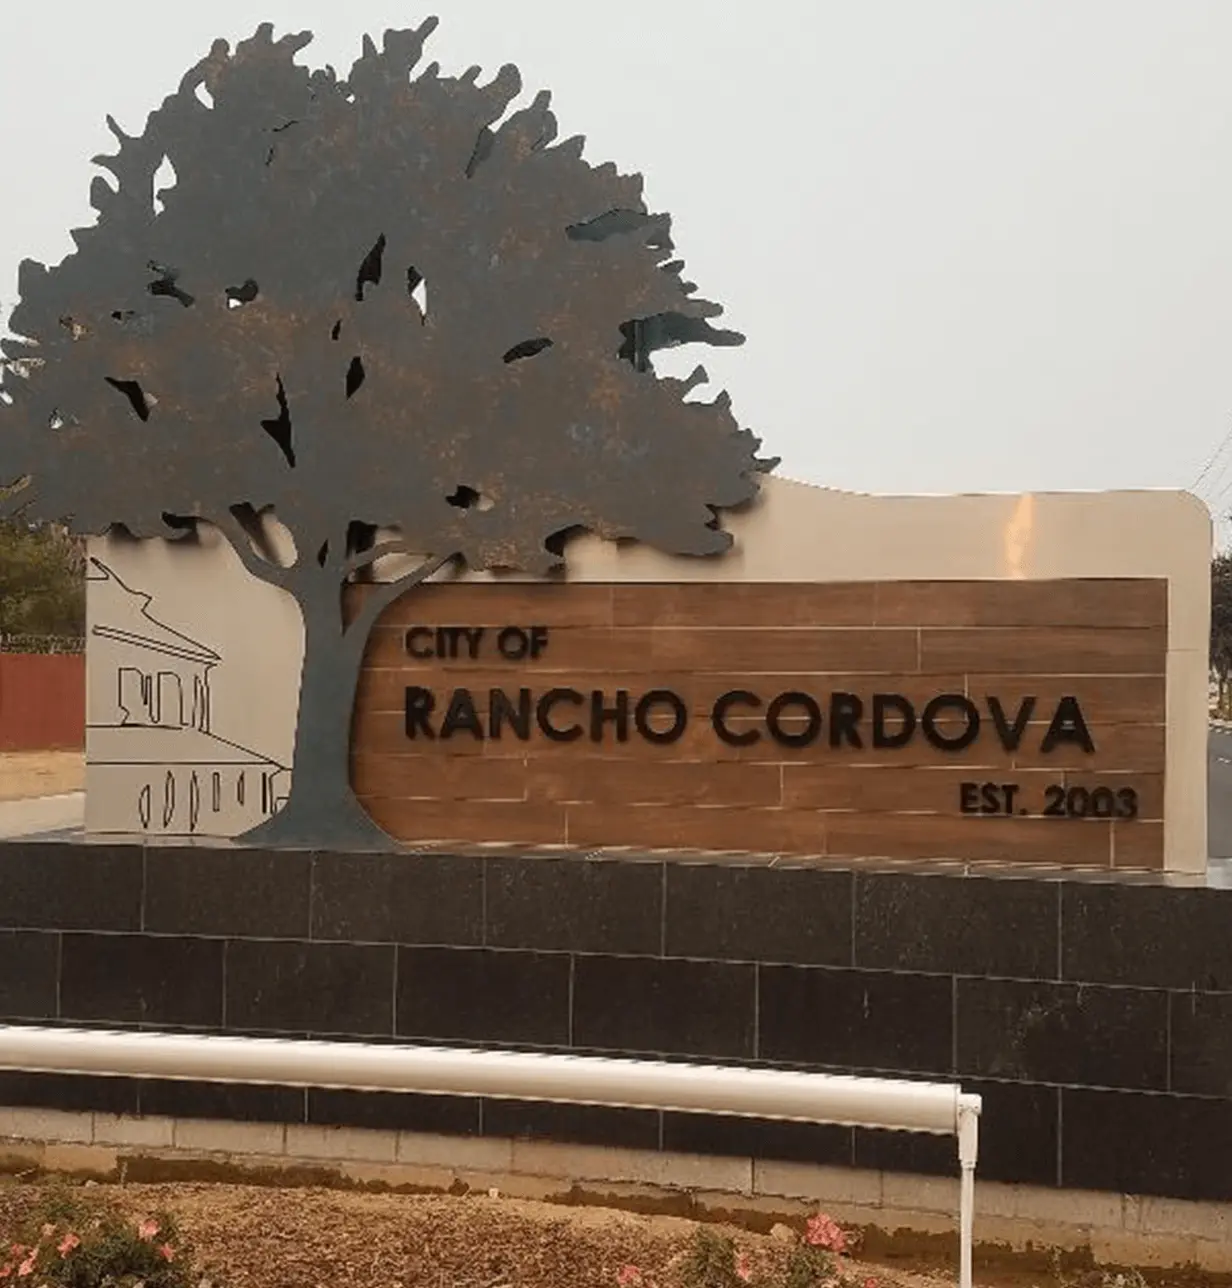 Rancho Cordova SEO